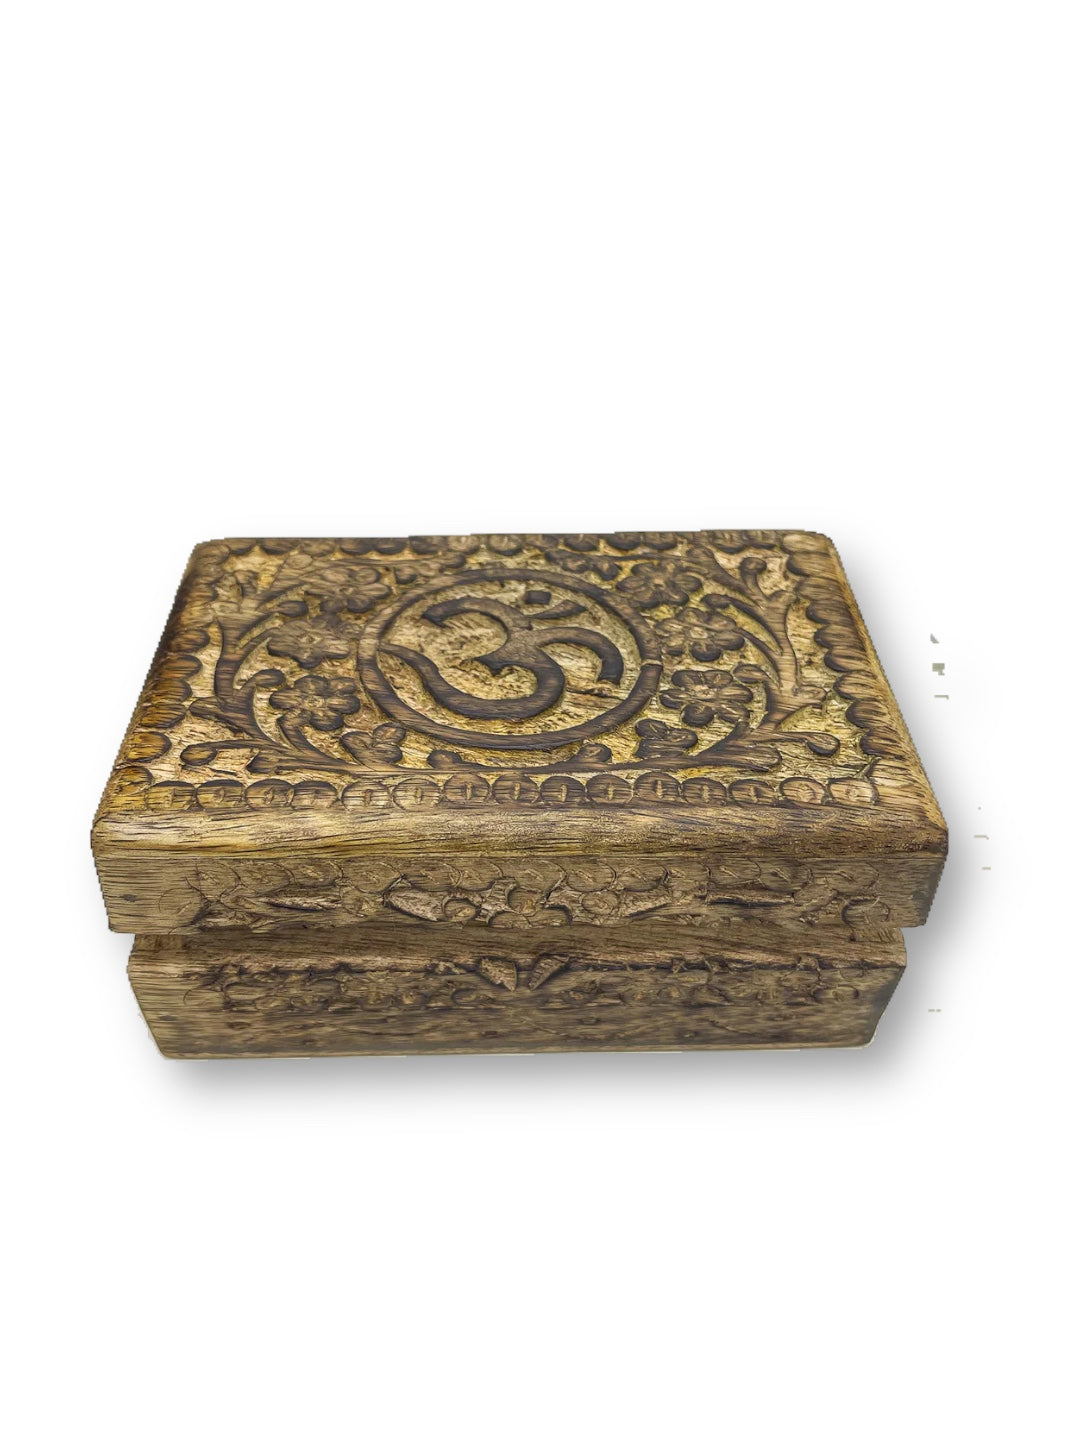 Wooden Jewelry box